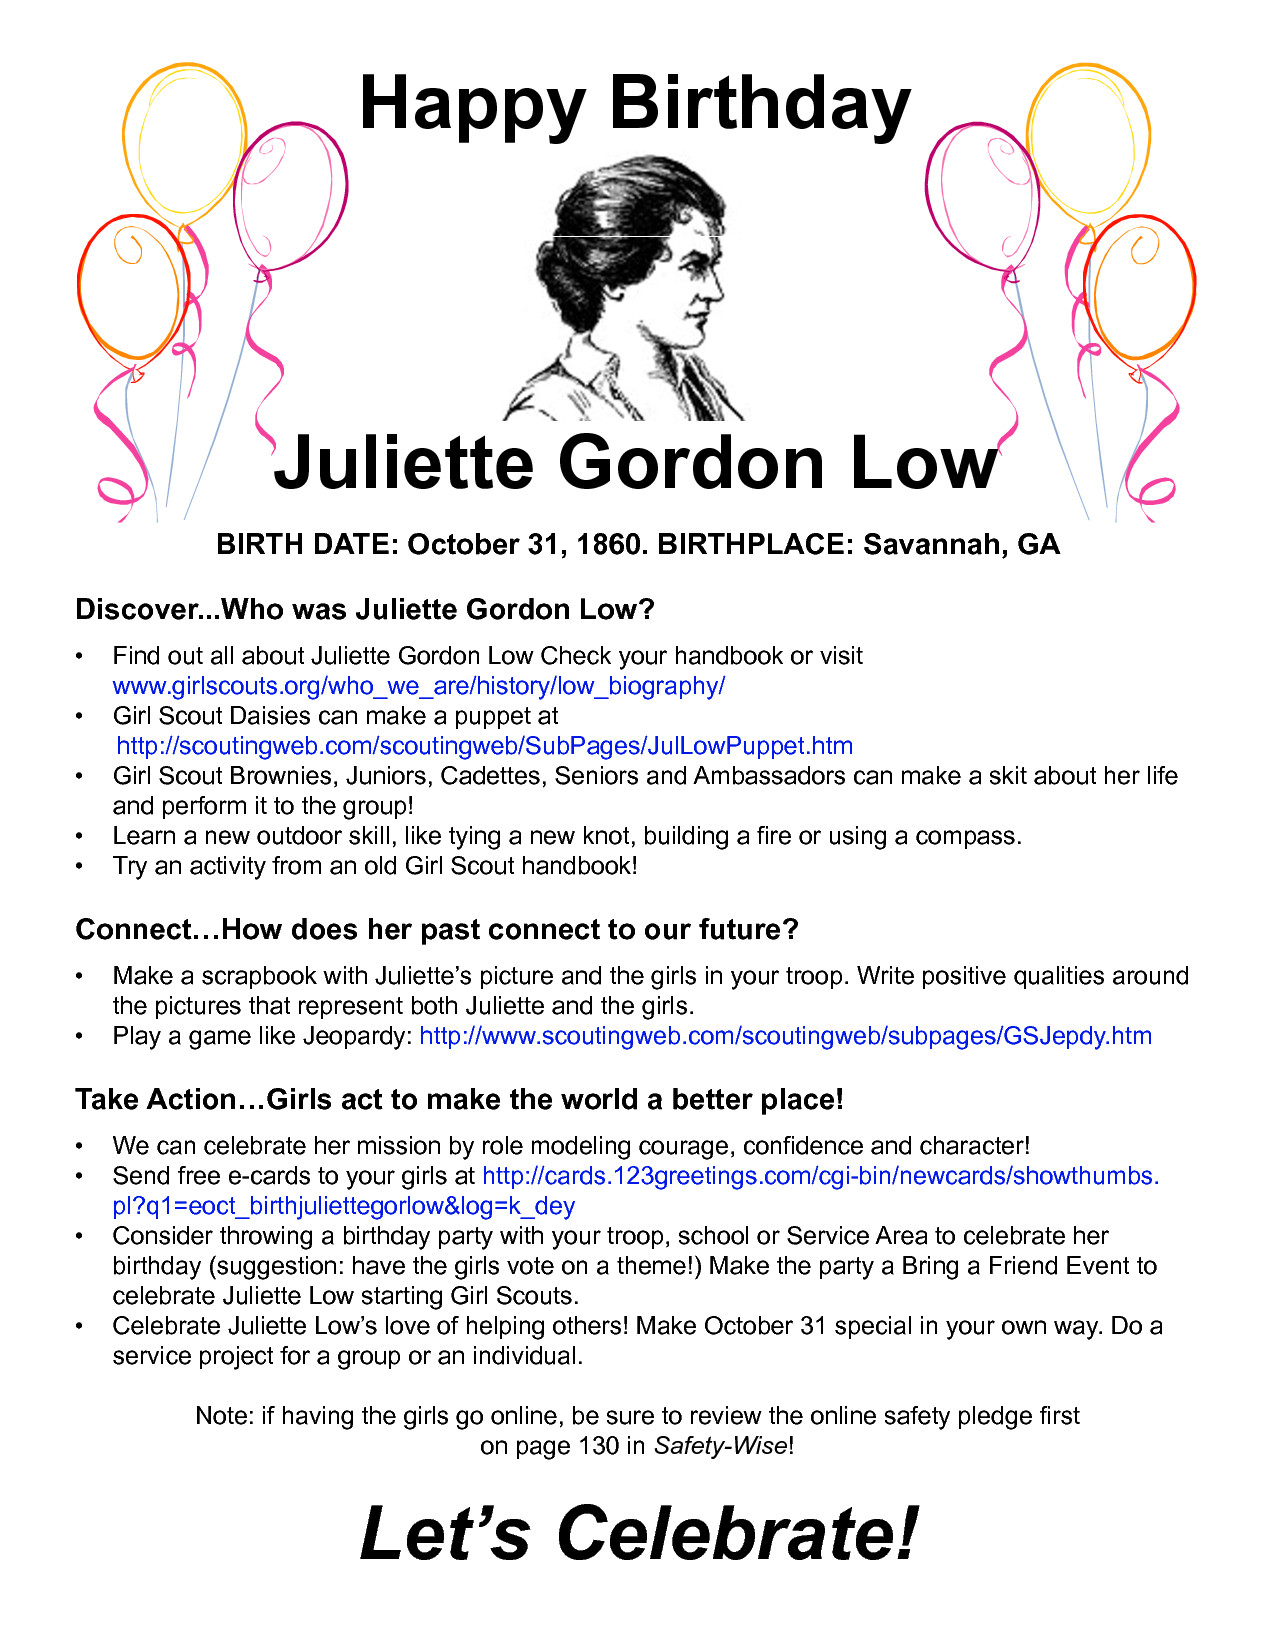 Juliette Gordon Low Birthday Party Ideas
 Juliette Gordon Low Birthday Bash Perfect for the troop